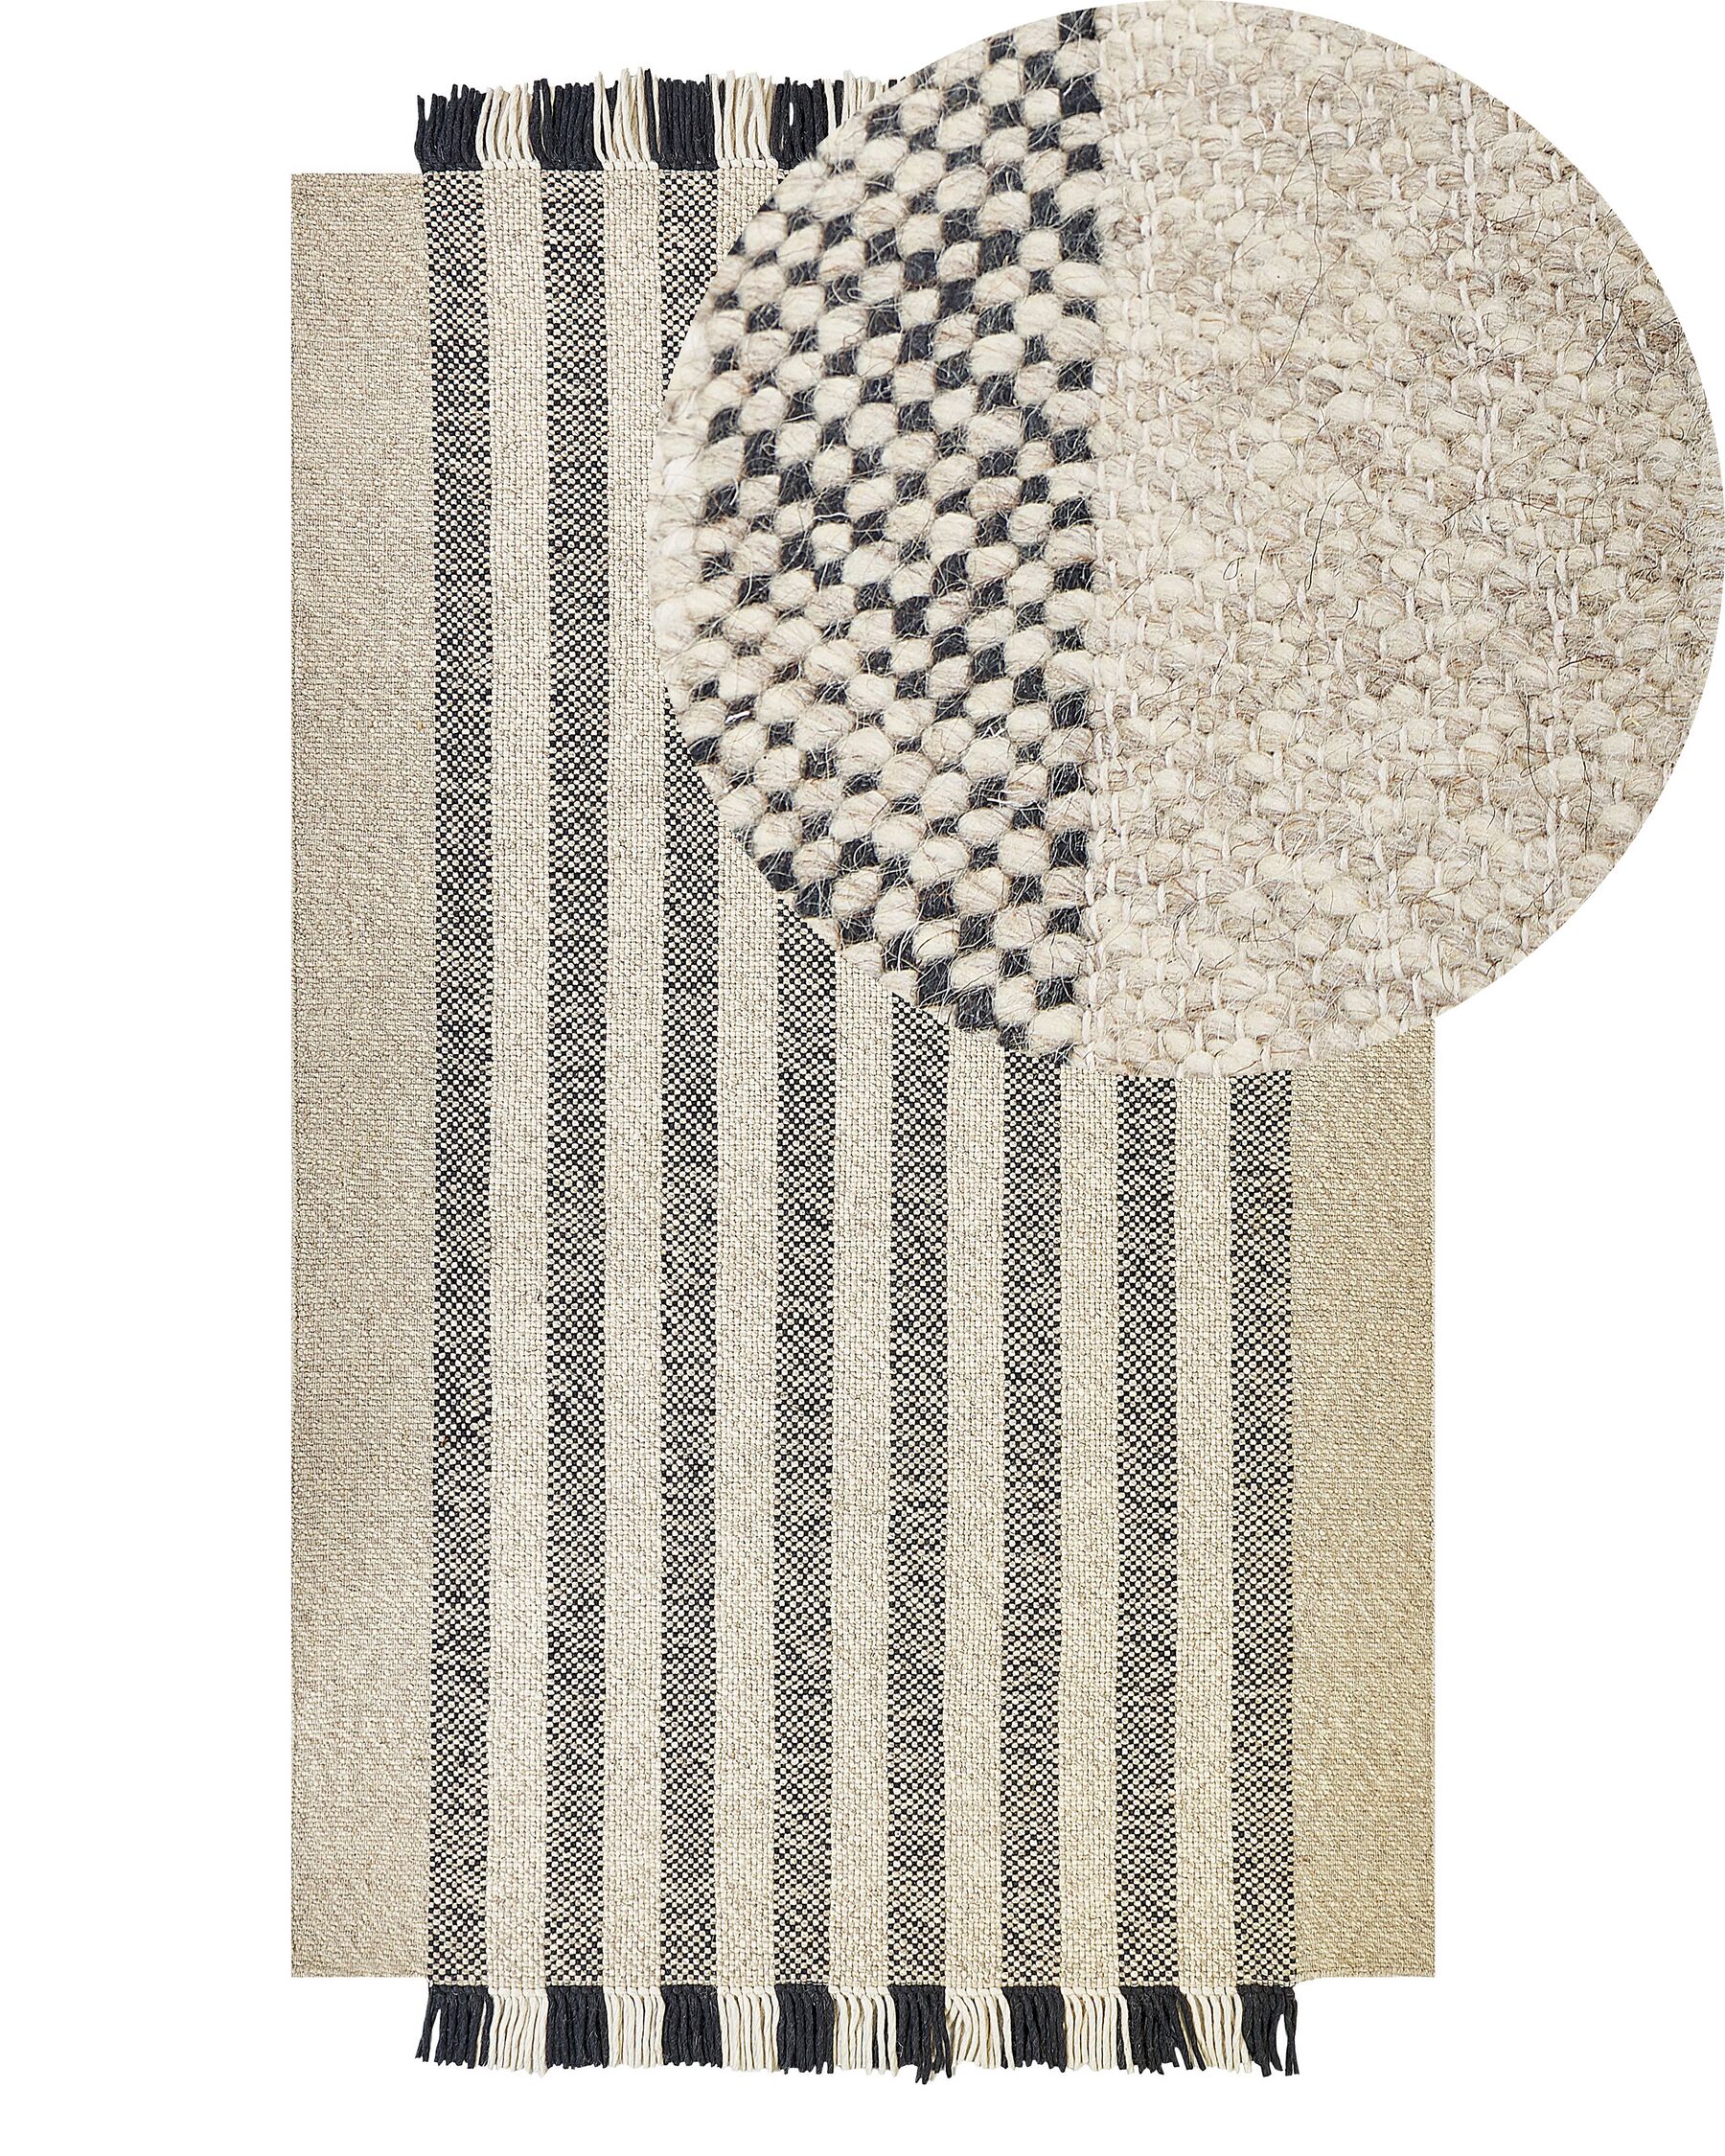 Tappeto lana bianco sporco e nero 140 x 200 cm TACETTIN_847200